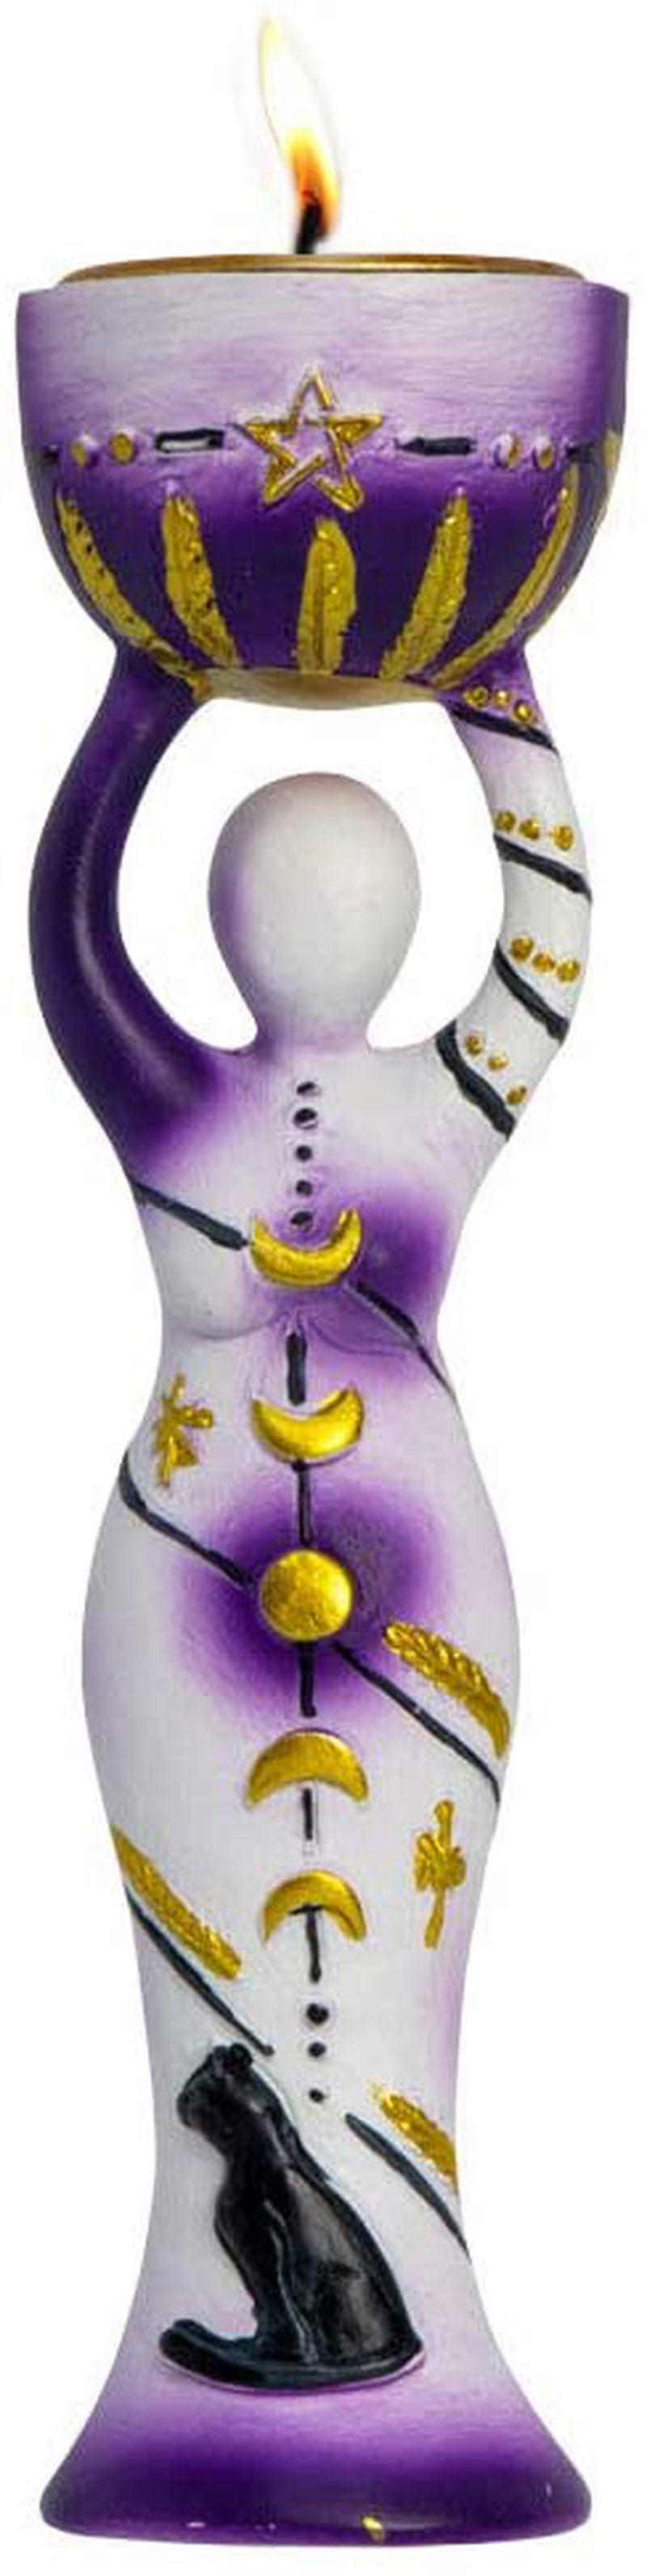 Kheops International Moon Goddess Polyresin T-Light Holder Wiccan Goddess Candle Holder Figurine